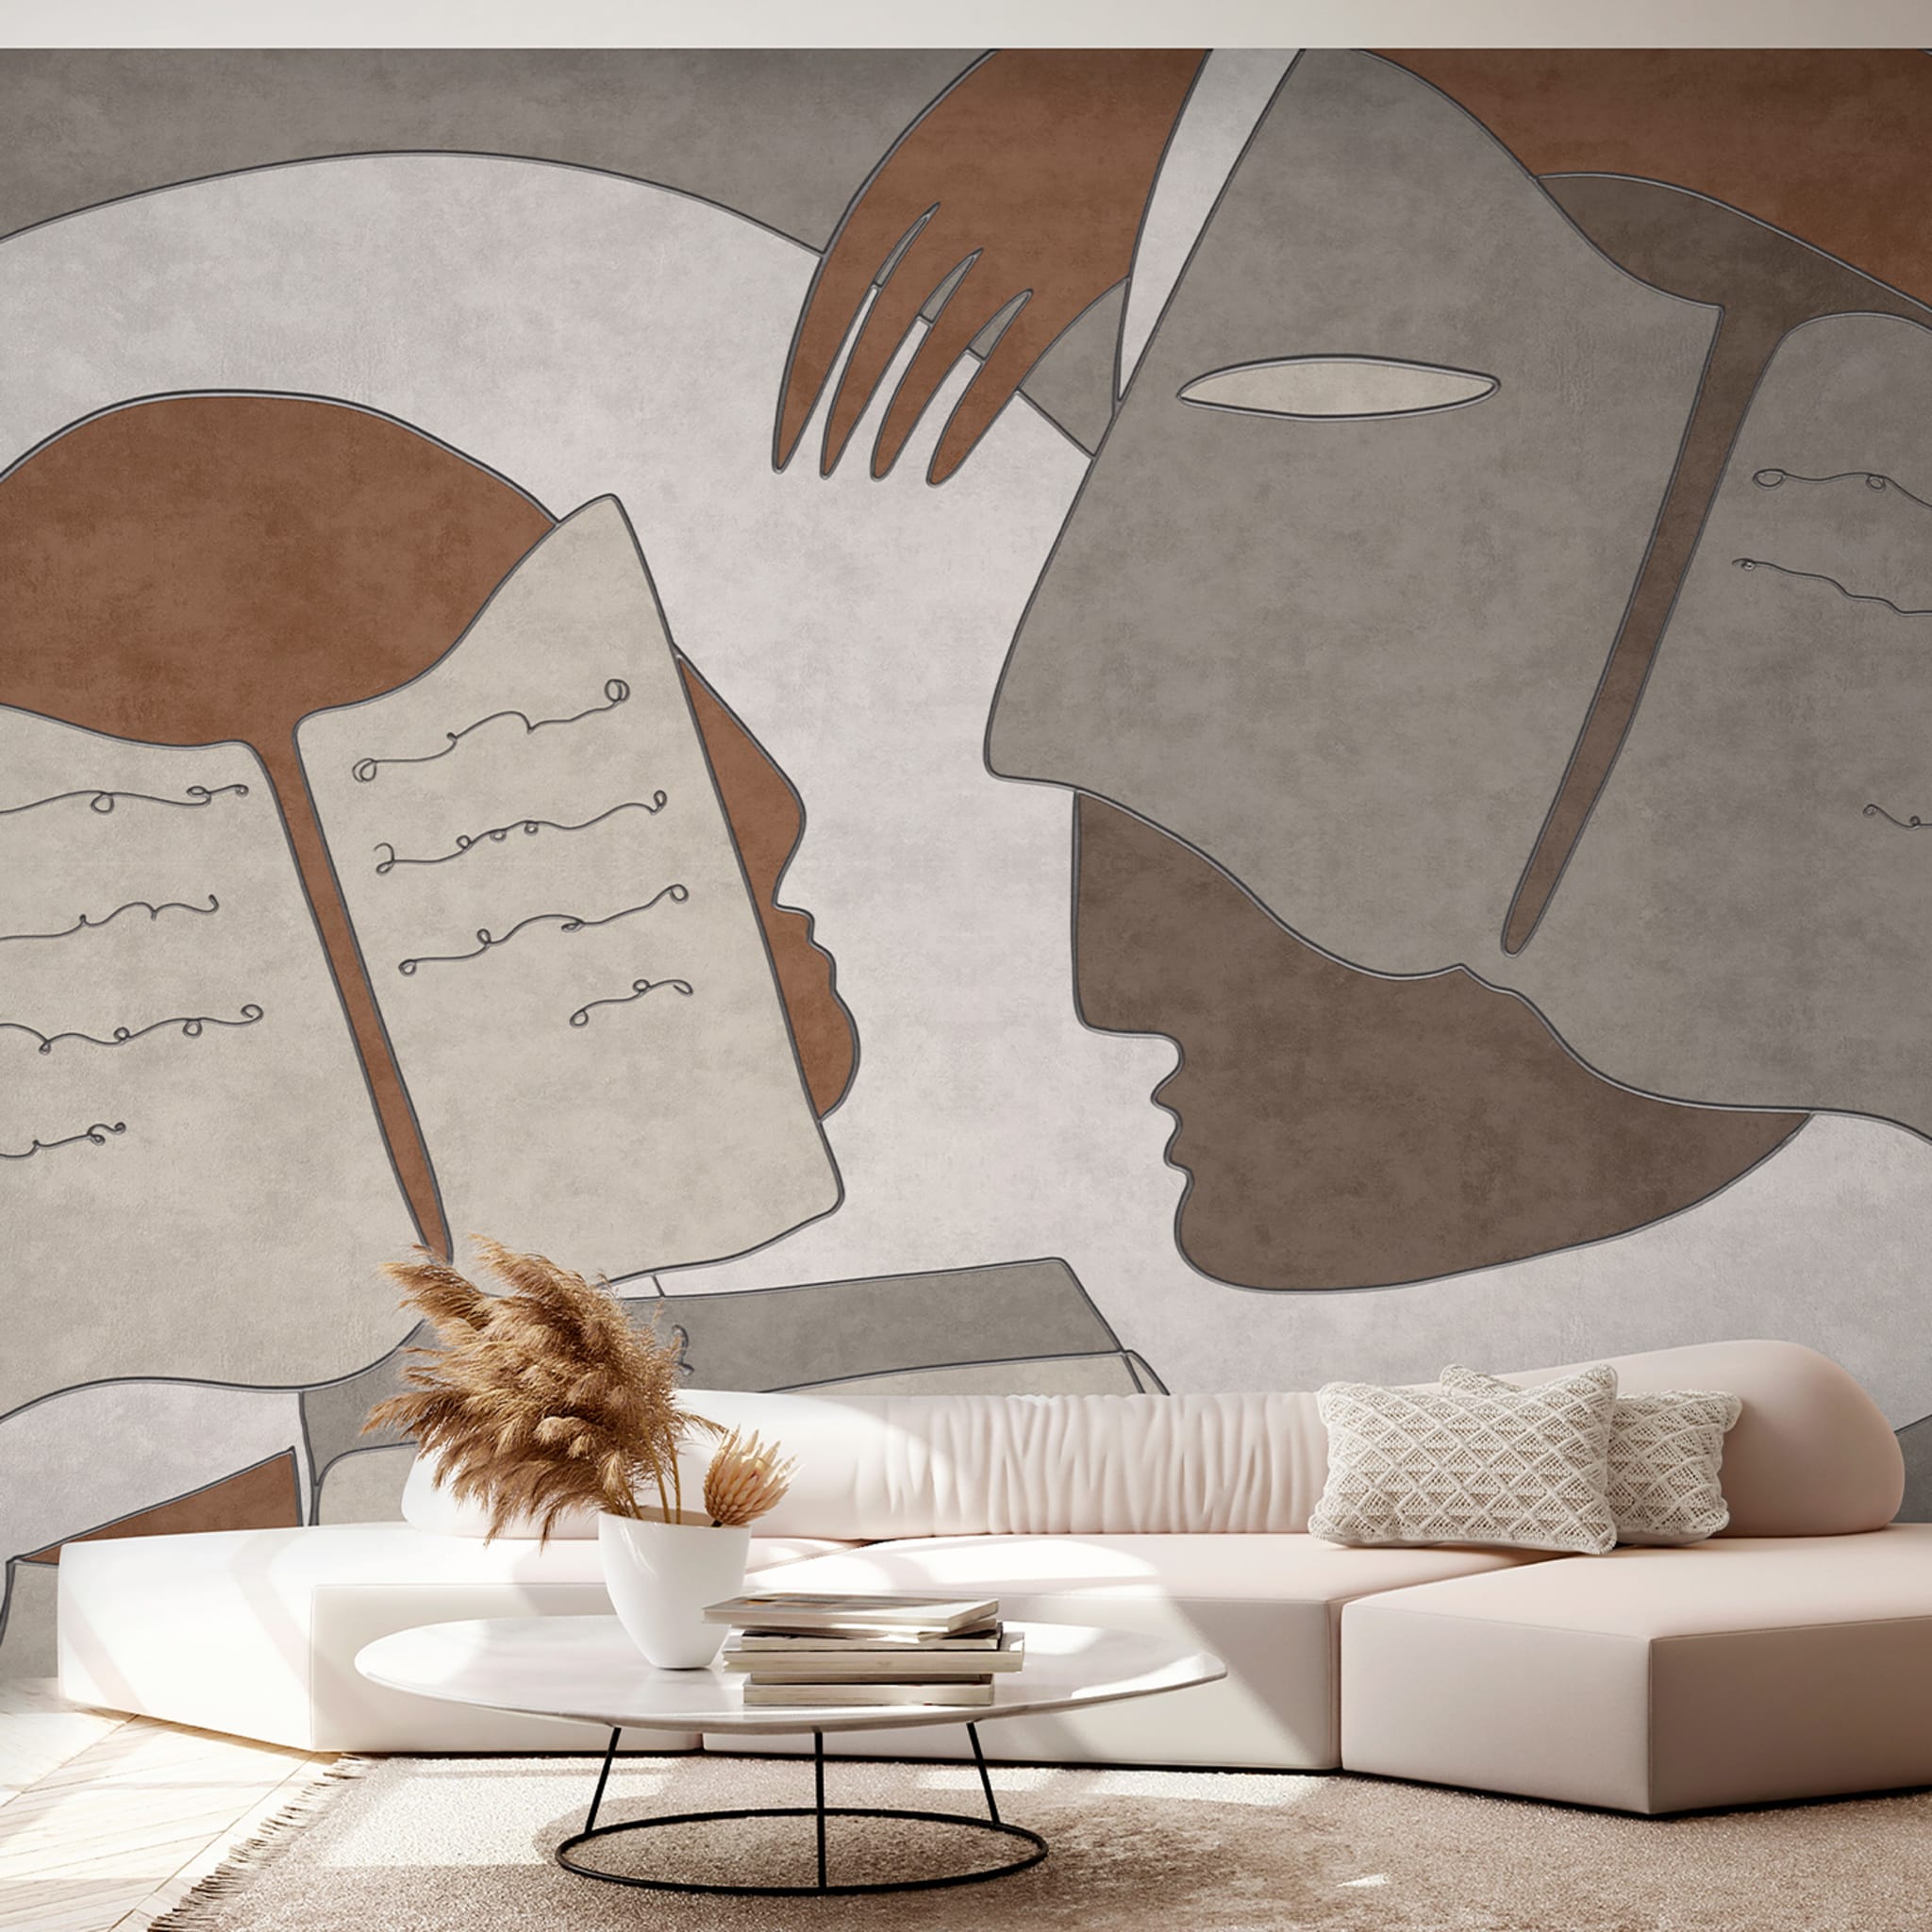 Brownish self introspection textured wallpaper - Alternative view 1